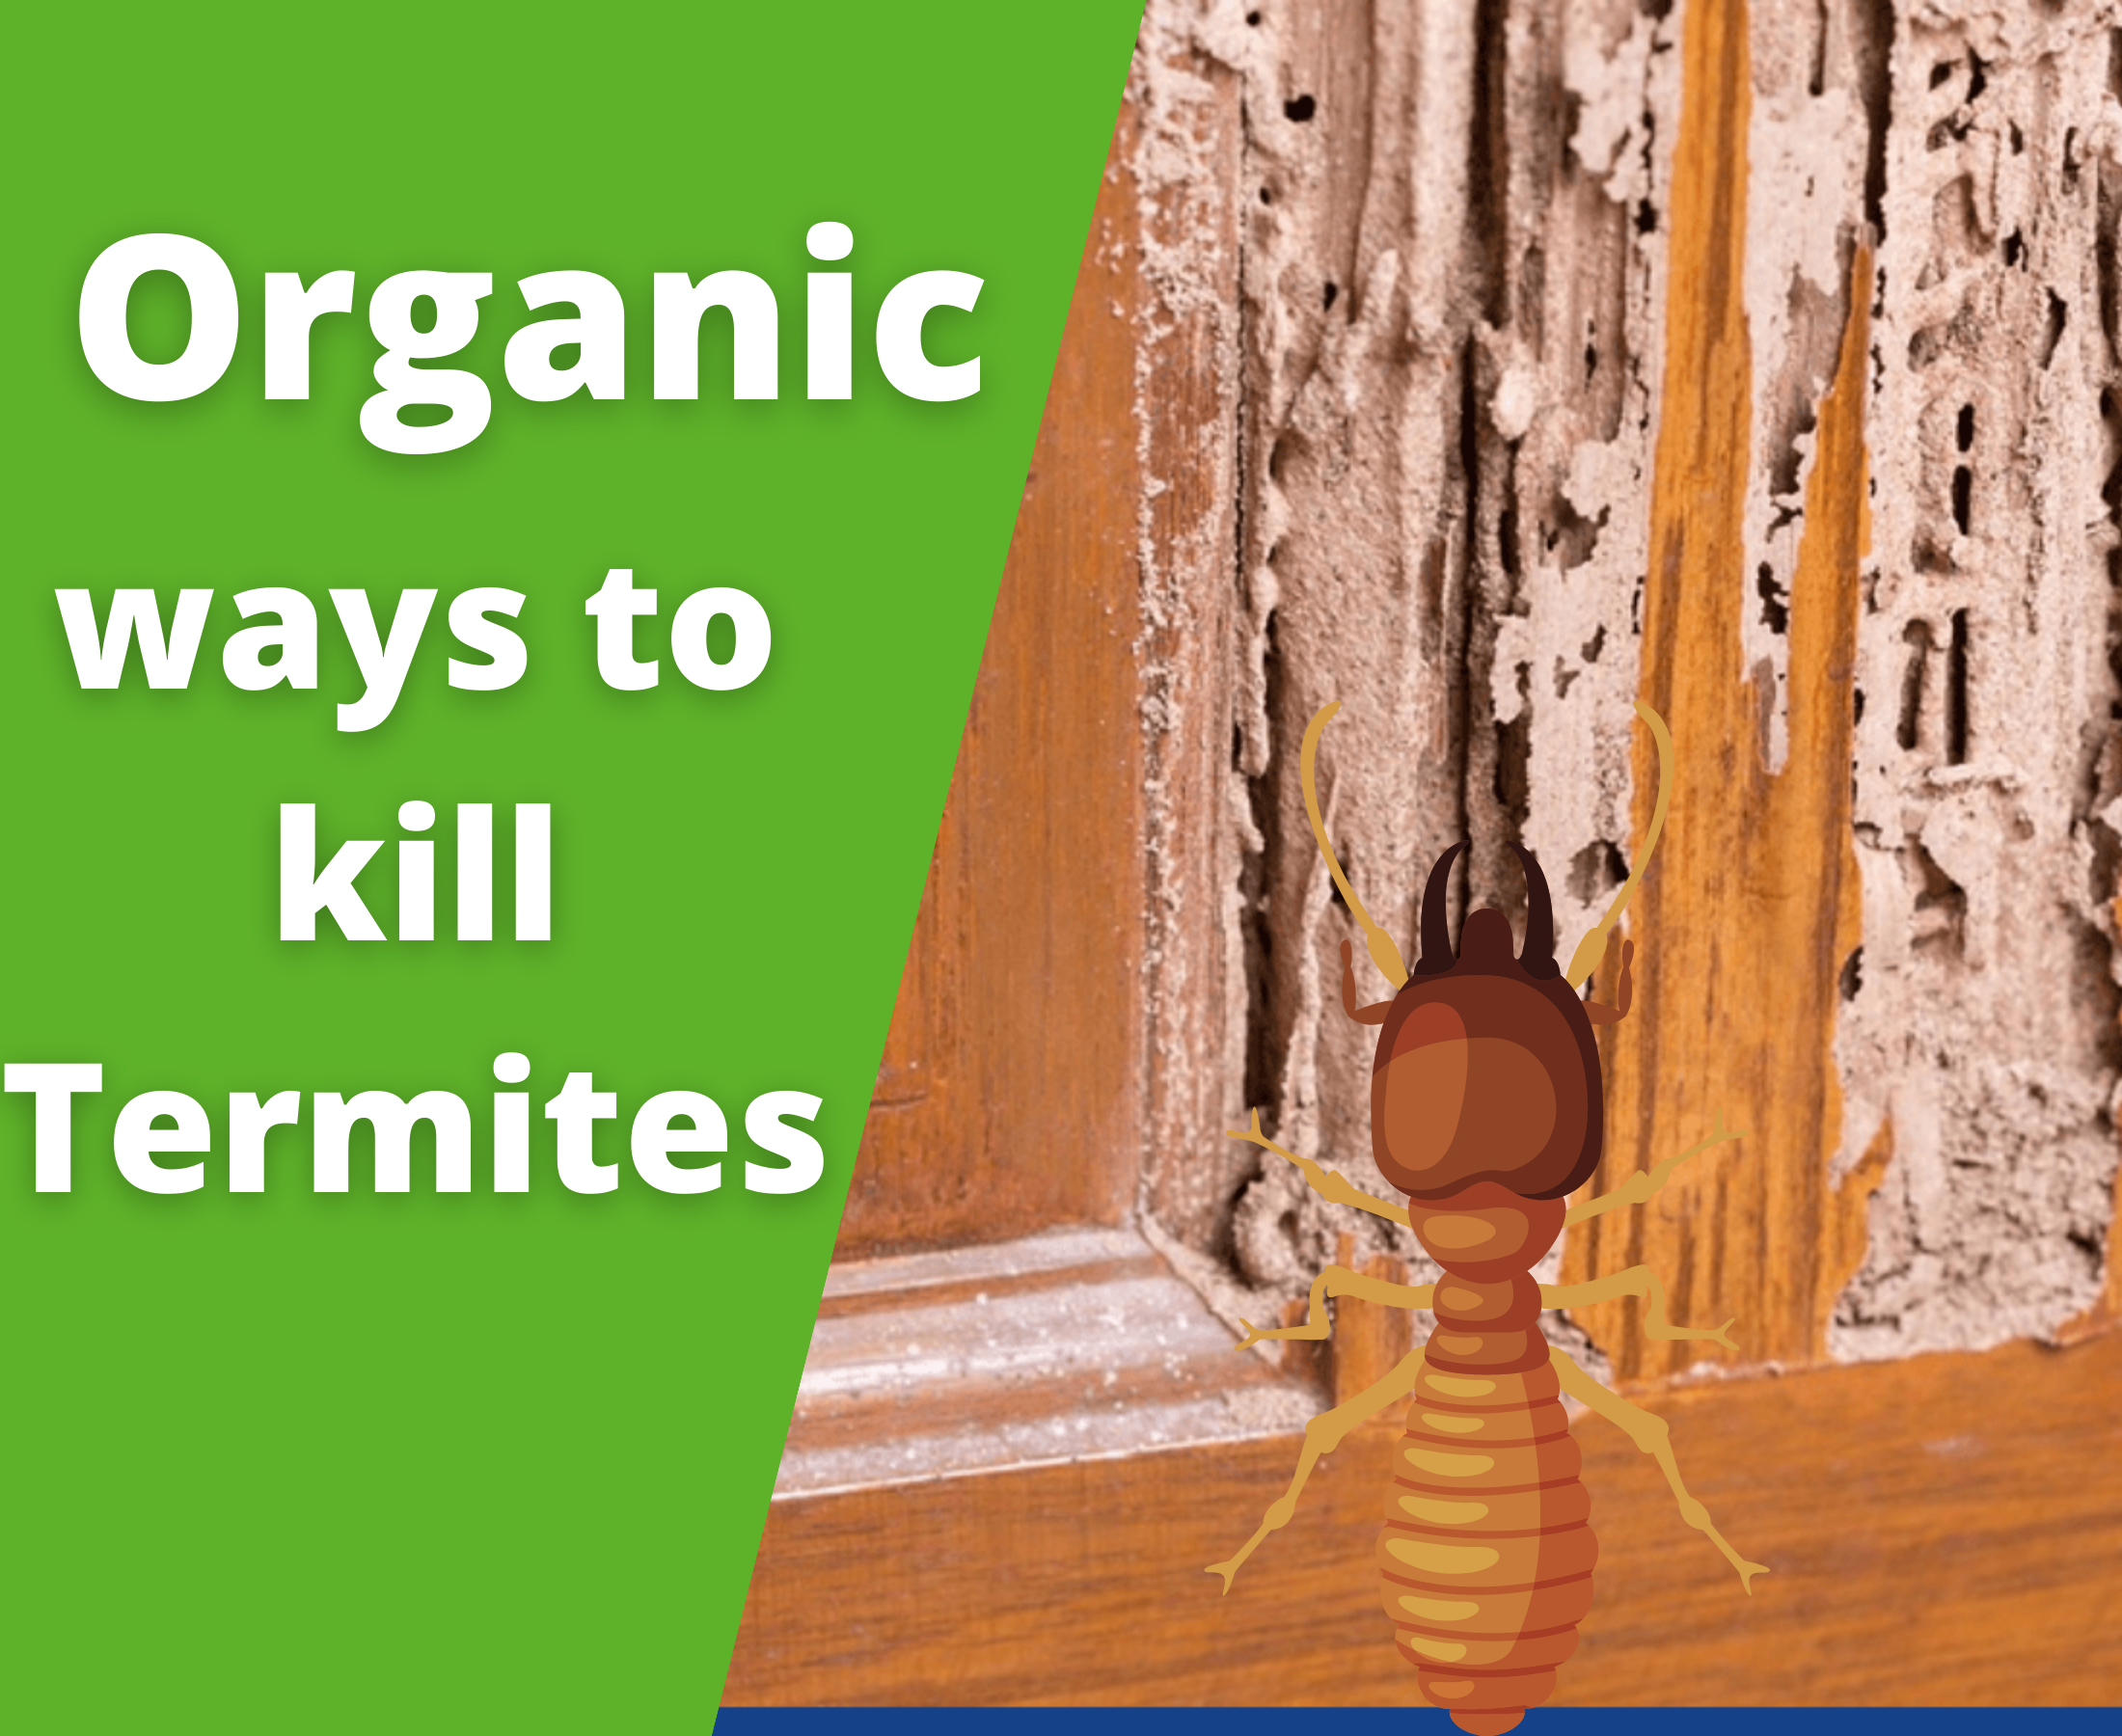 Non-toxic organic termite control product and techniques?